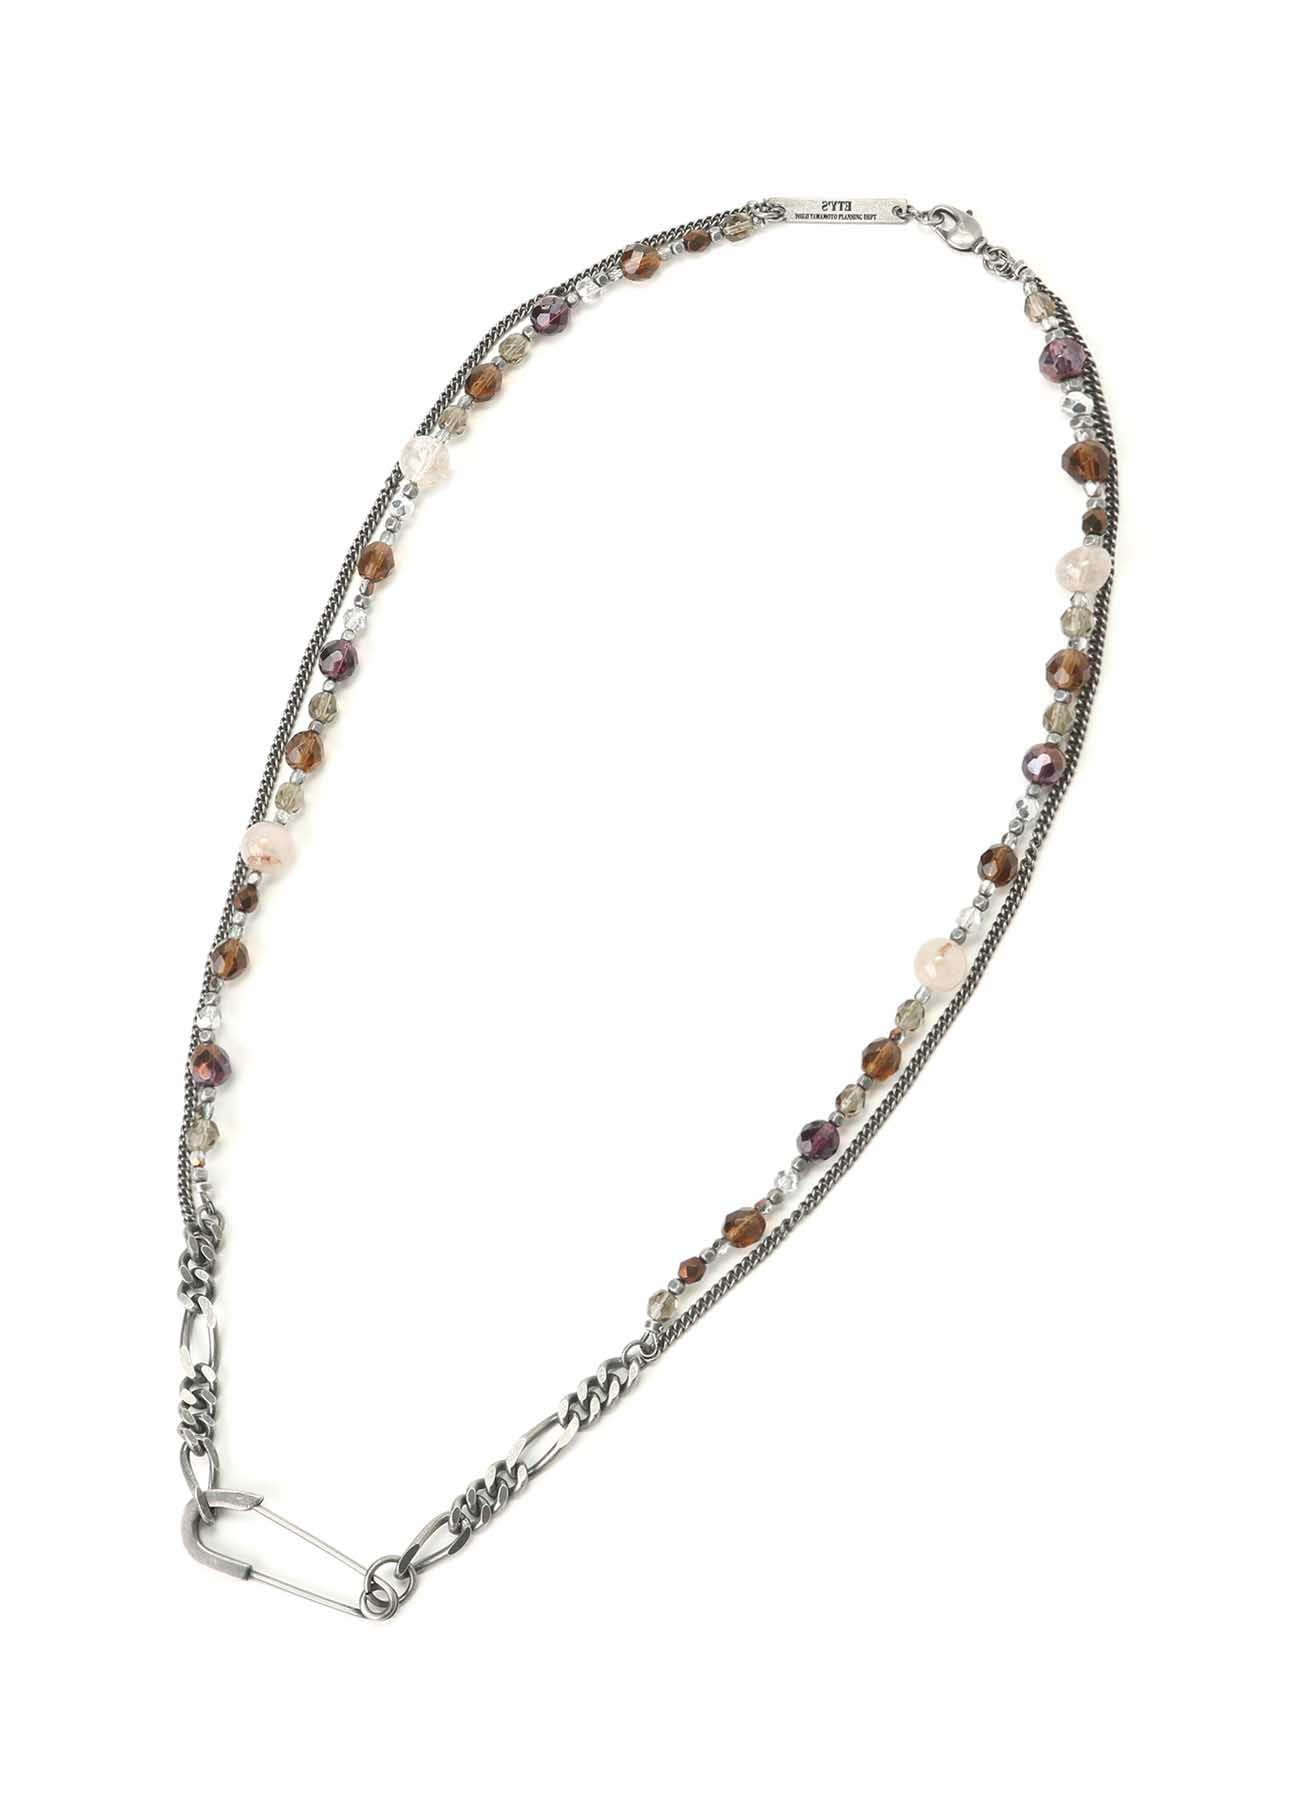 Rutile quartz + Glass Beads Brass Necklace